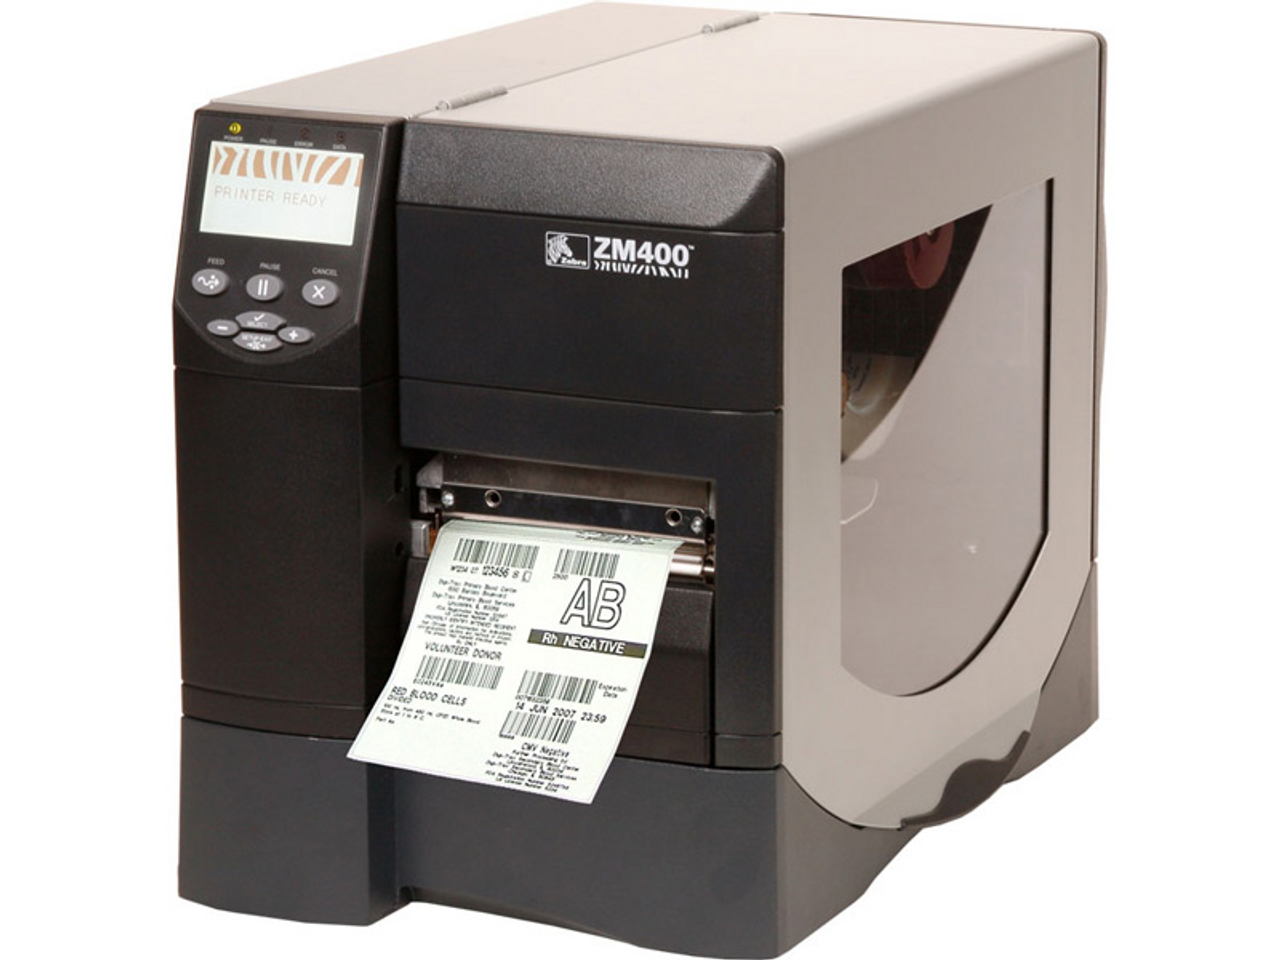 Zebra S Series Zm400 Zm400 2001 0000a Thermal Printer 8665